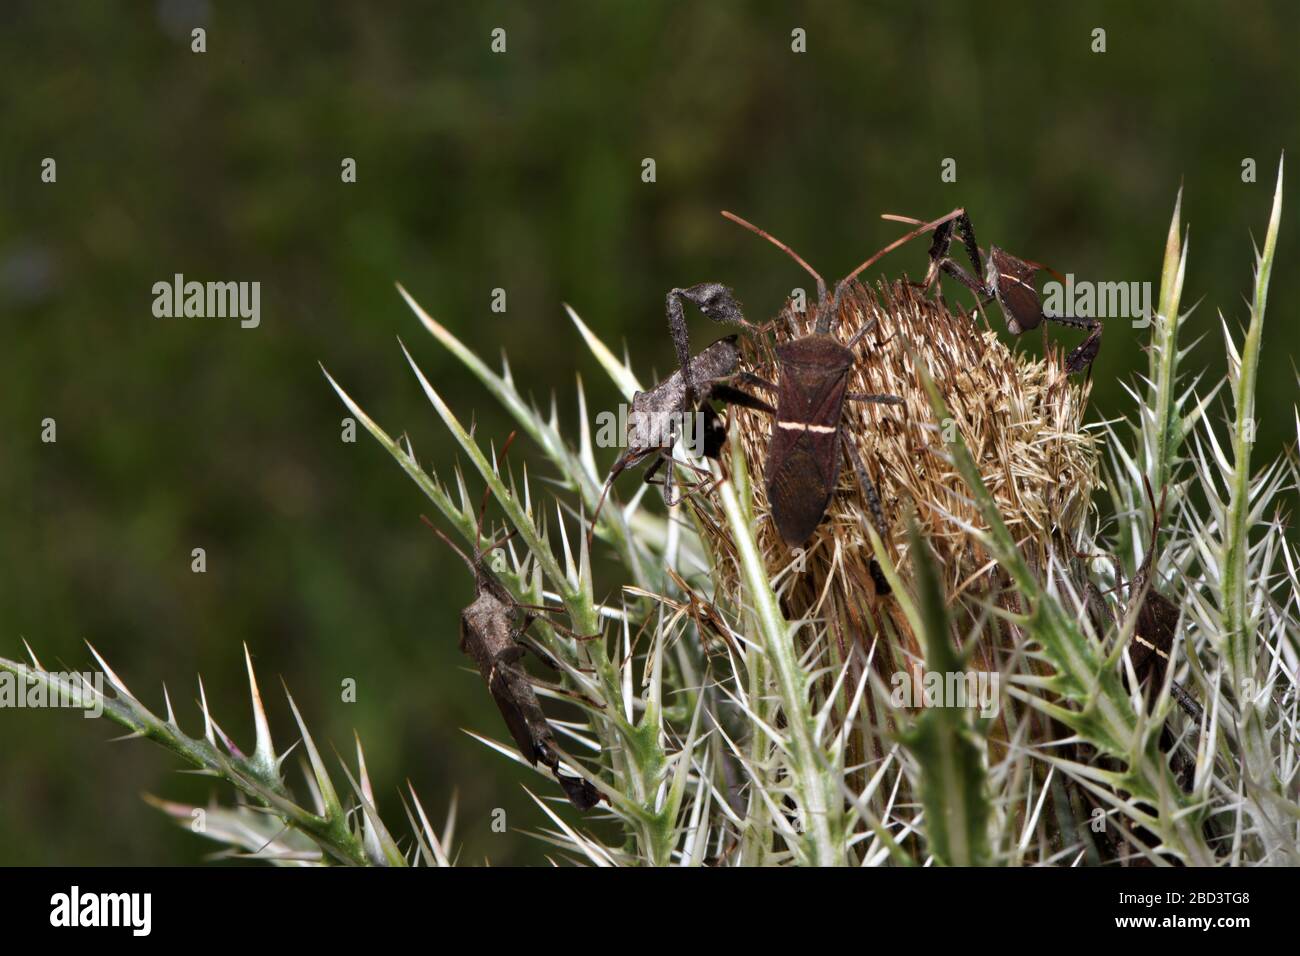 Eastern foglia footed bug. Foto Stock